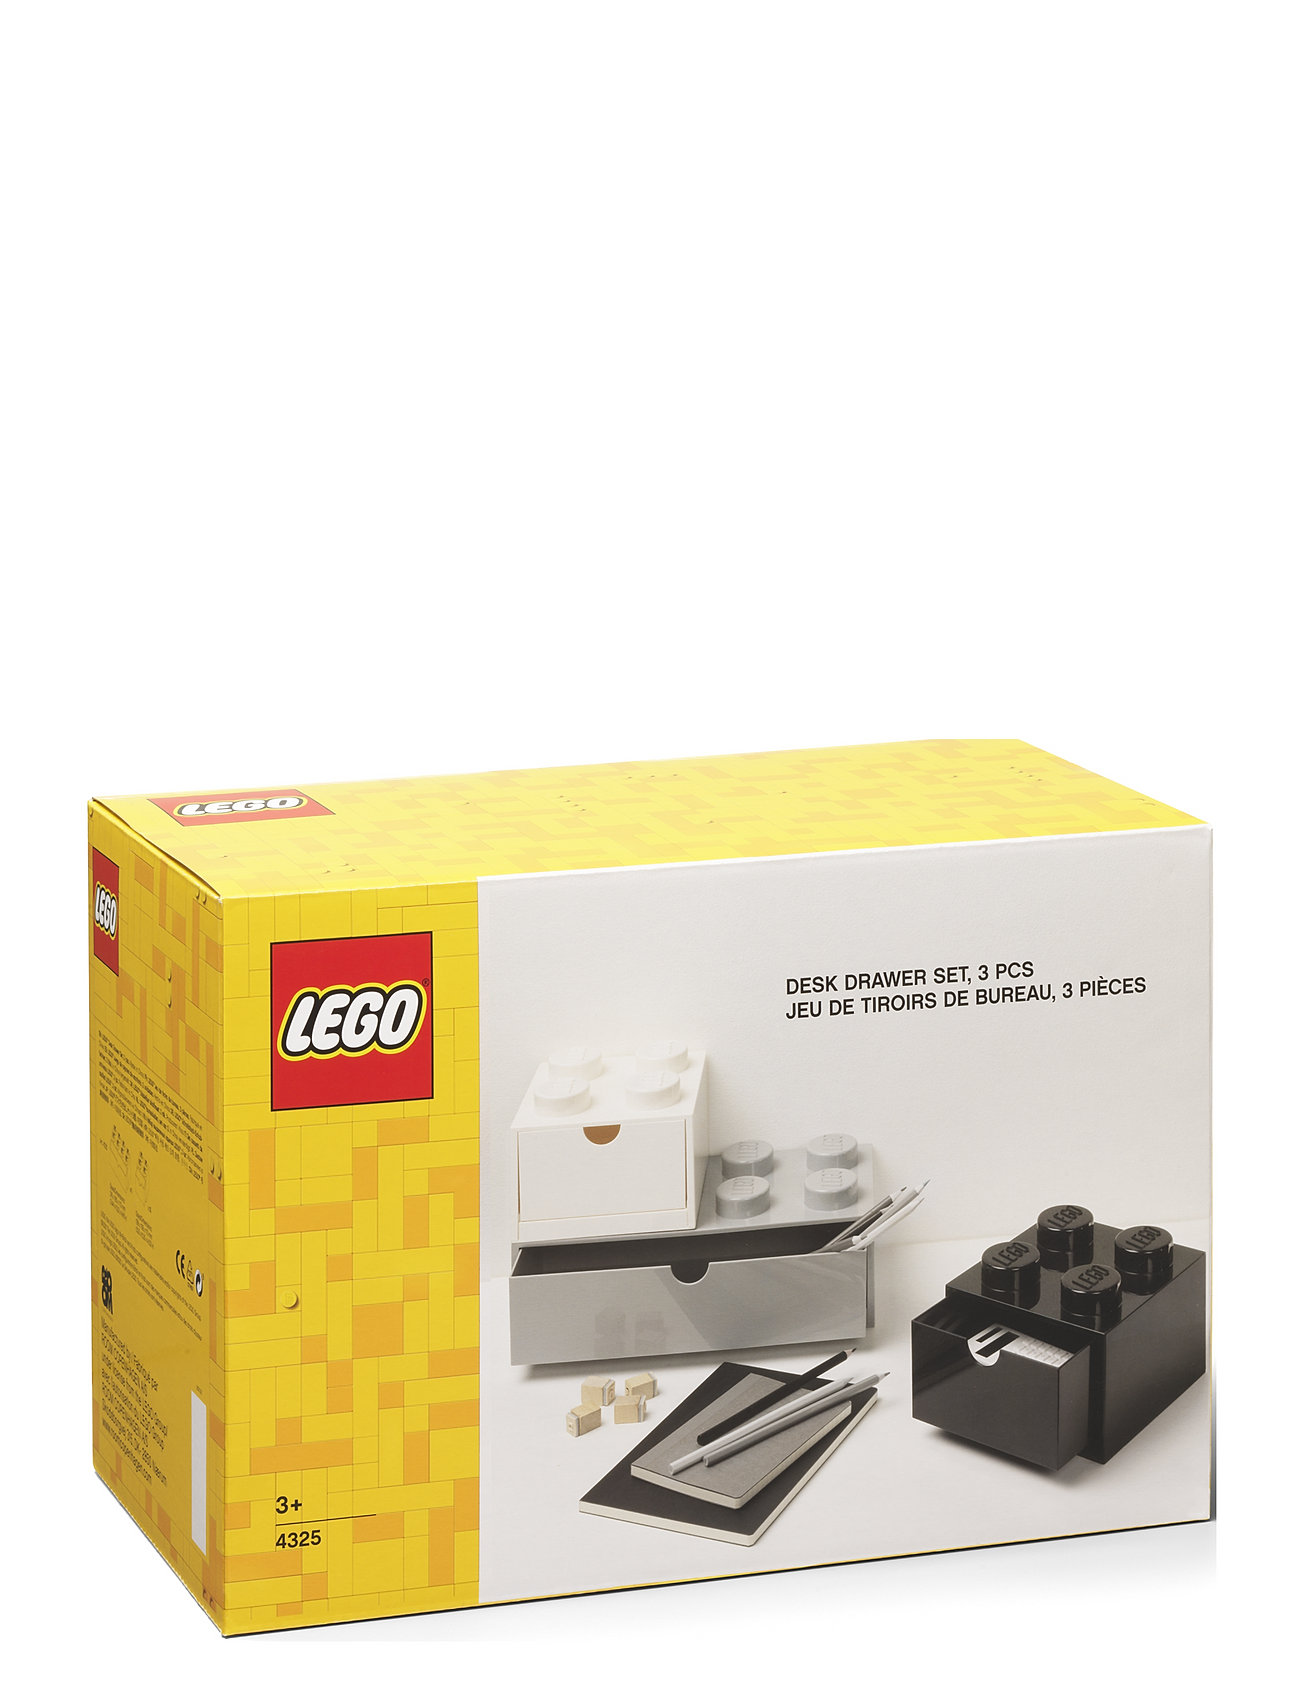 LEGO STORAGE Lego Desk Drawer Set - Black, Grey & White Home Kids Decor Storage Boxes Multi/mønstret STORAGE*Betinget Tilbud